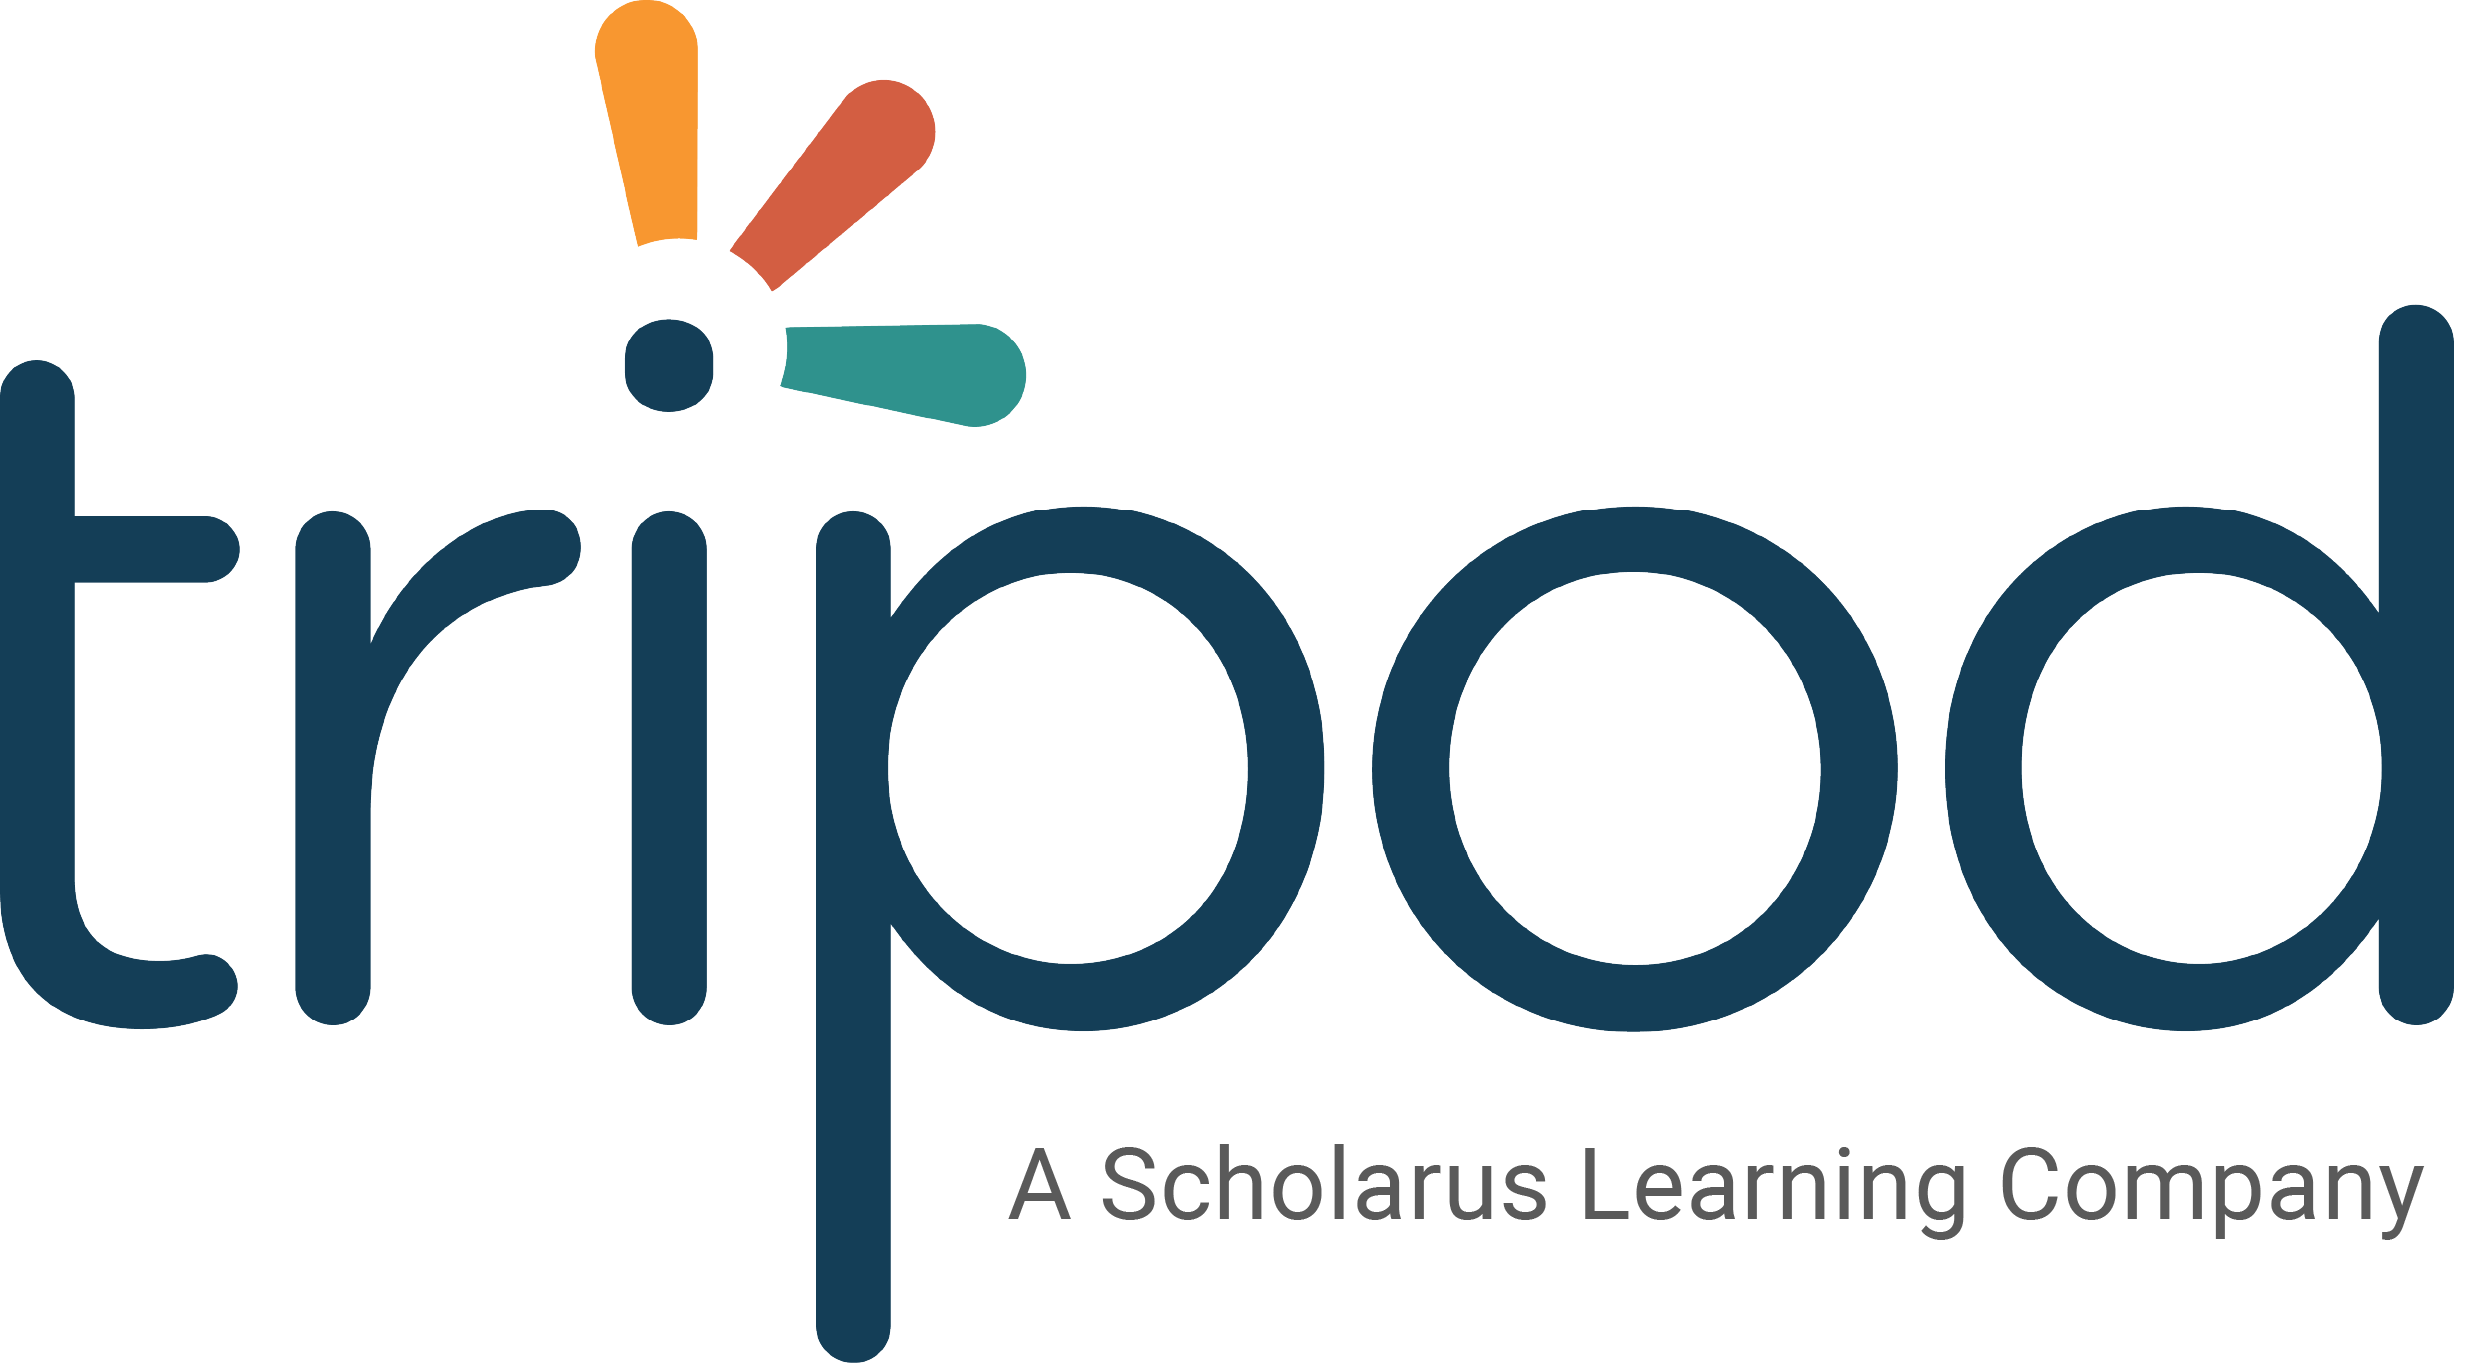 tripod-logo-scholarus-tagline